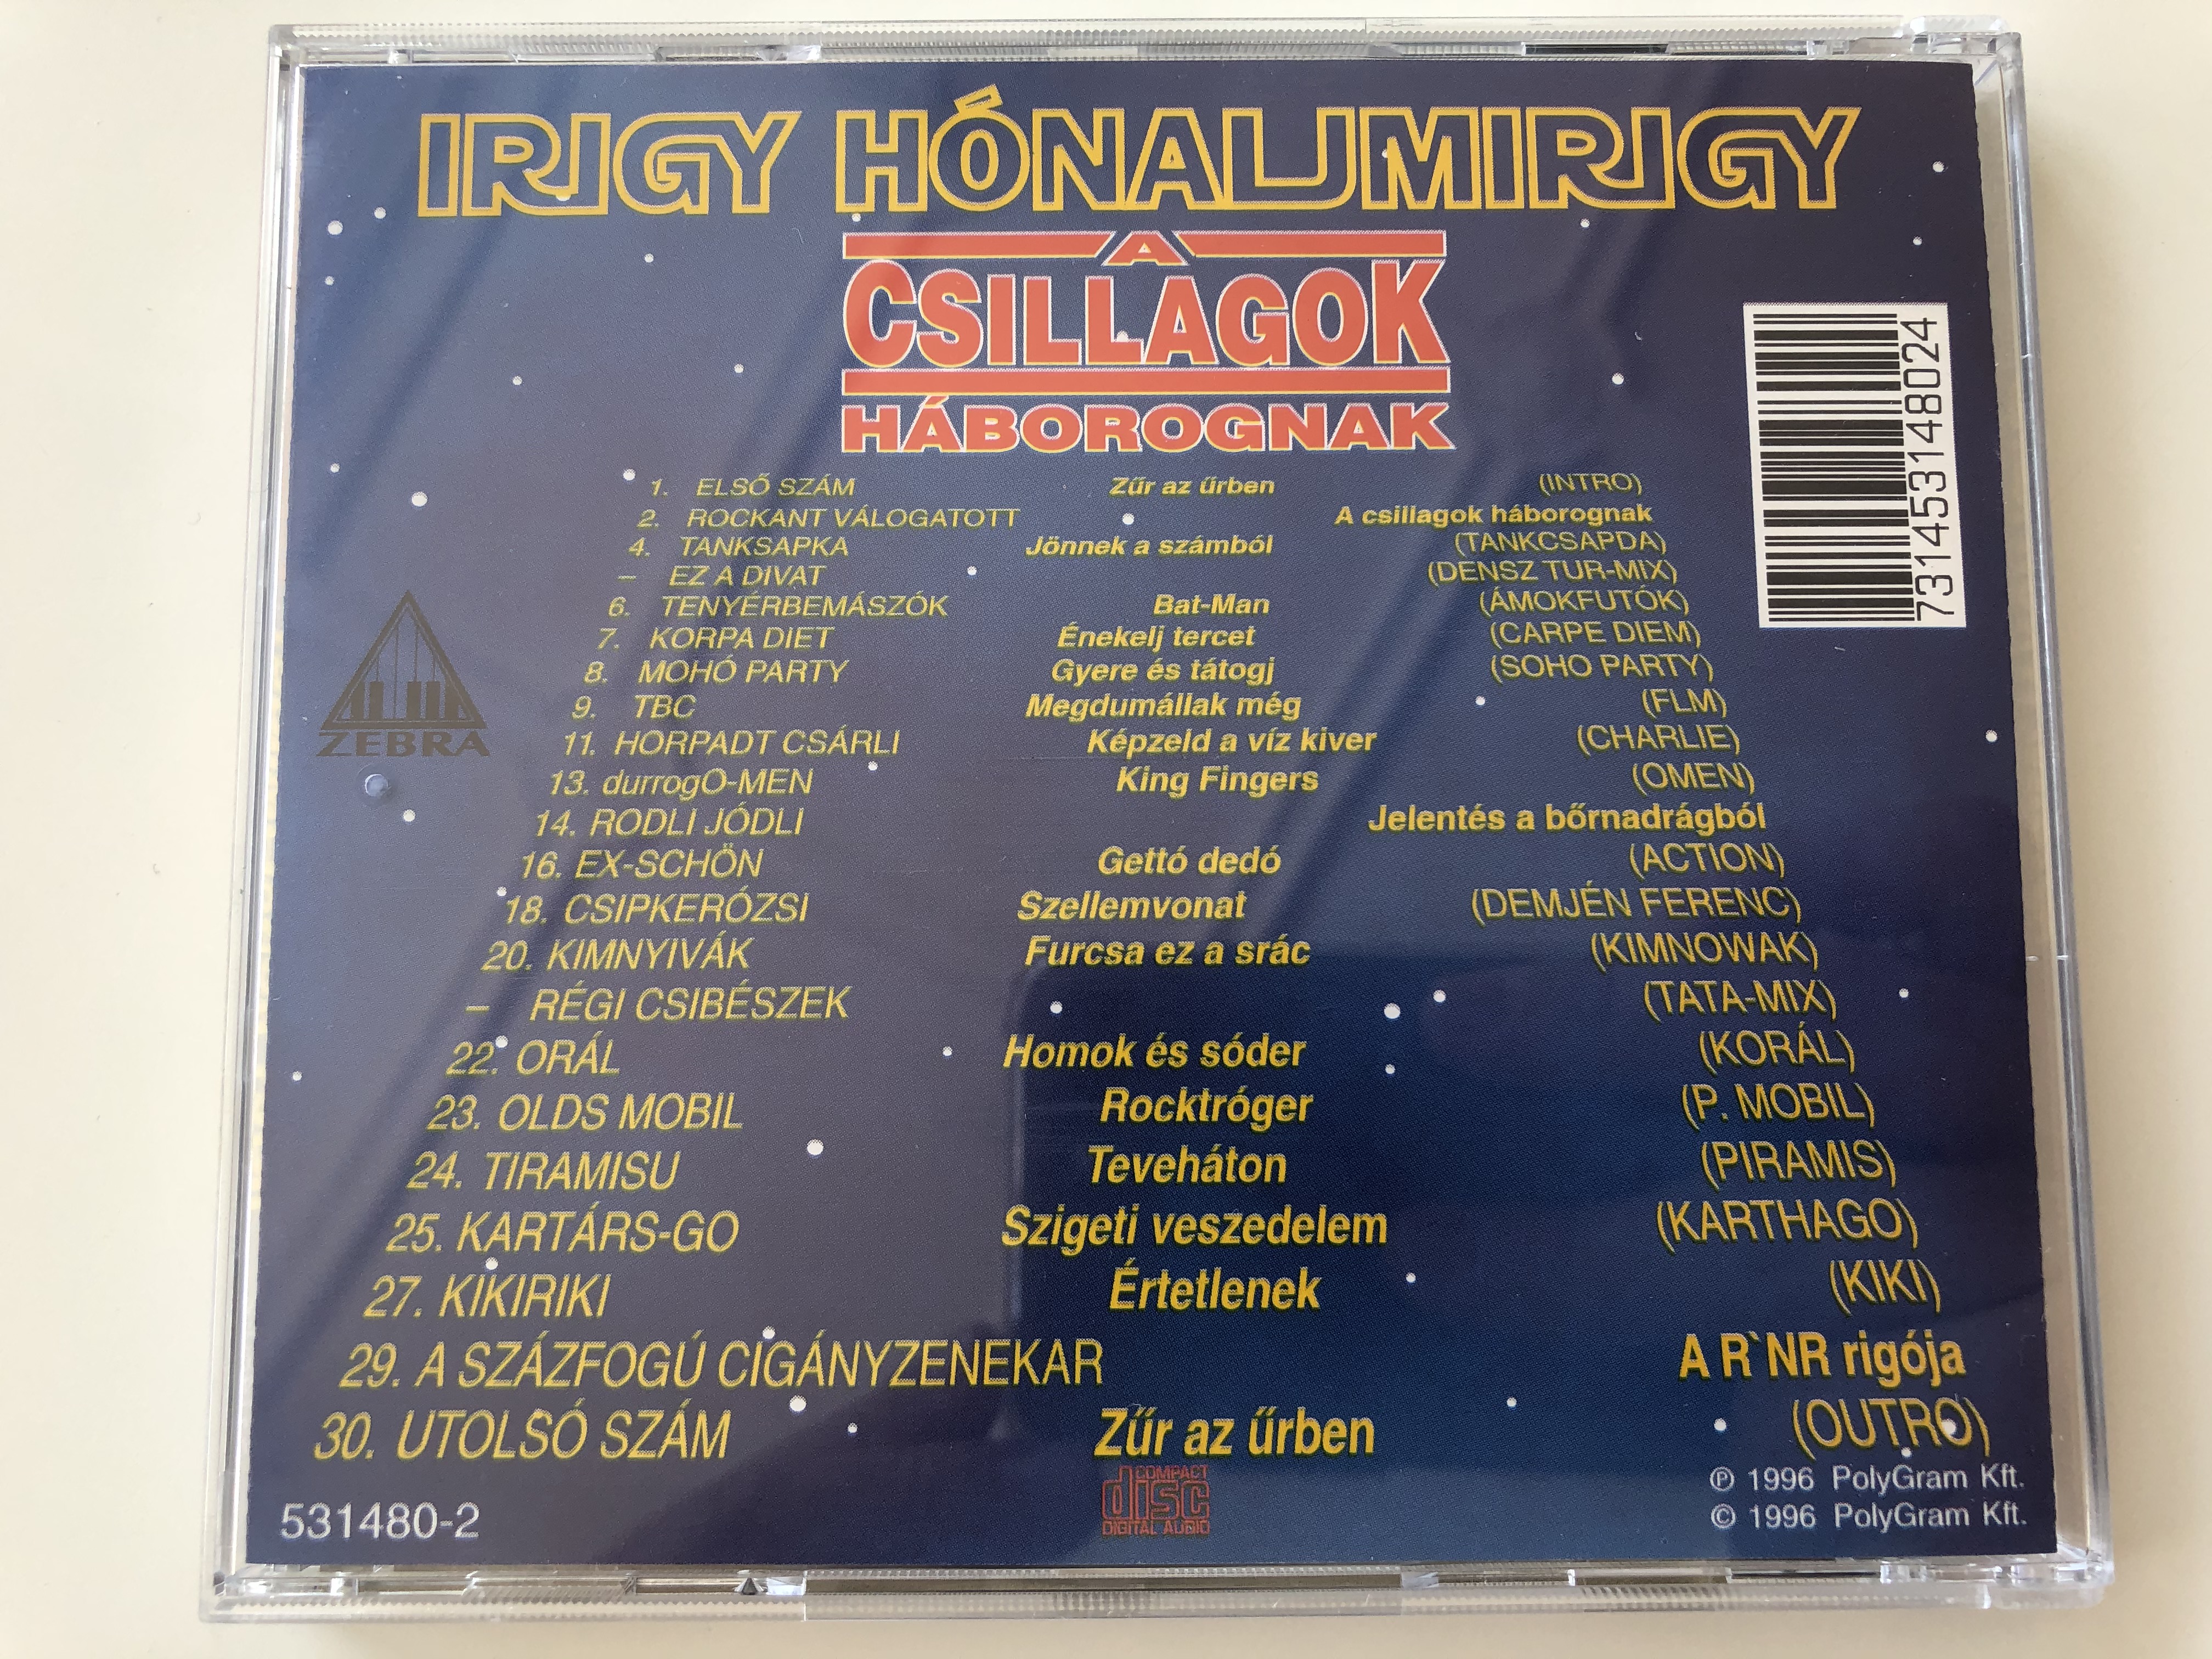 irigy-h-naljmirigy-a-csillagok-h-borognak-polygram-audio-cd-1996-531480-2-9-.jpg